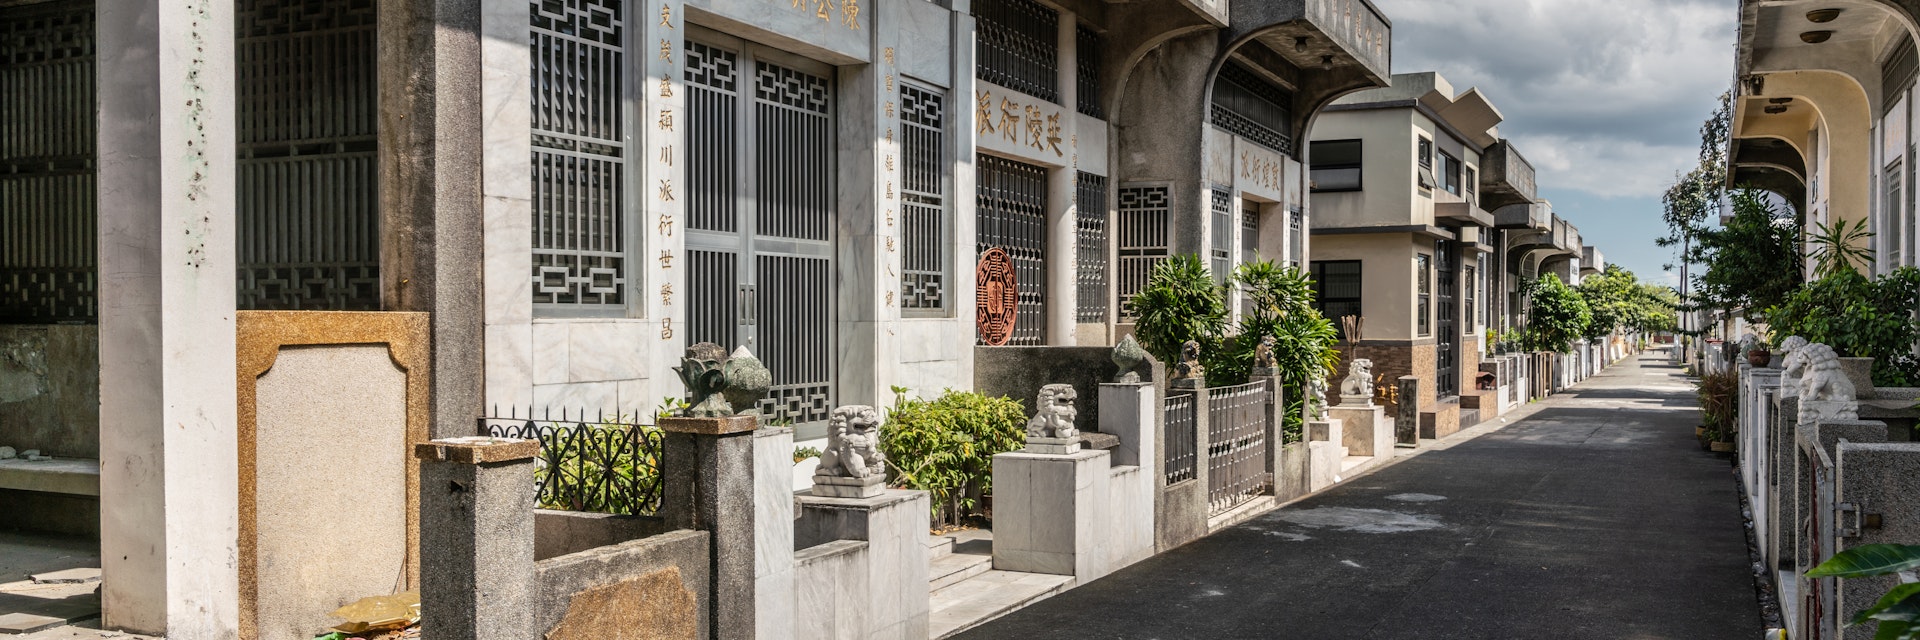 Chinese Cemetery in Manila, Philippines.